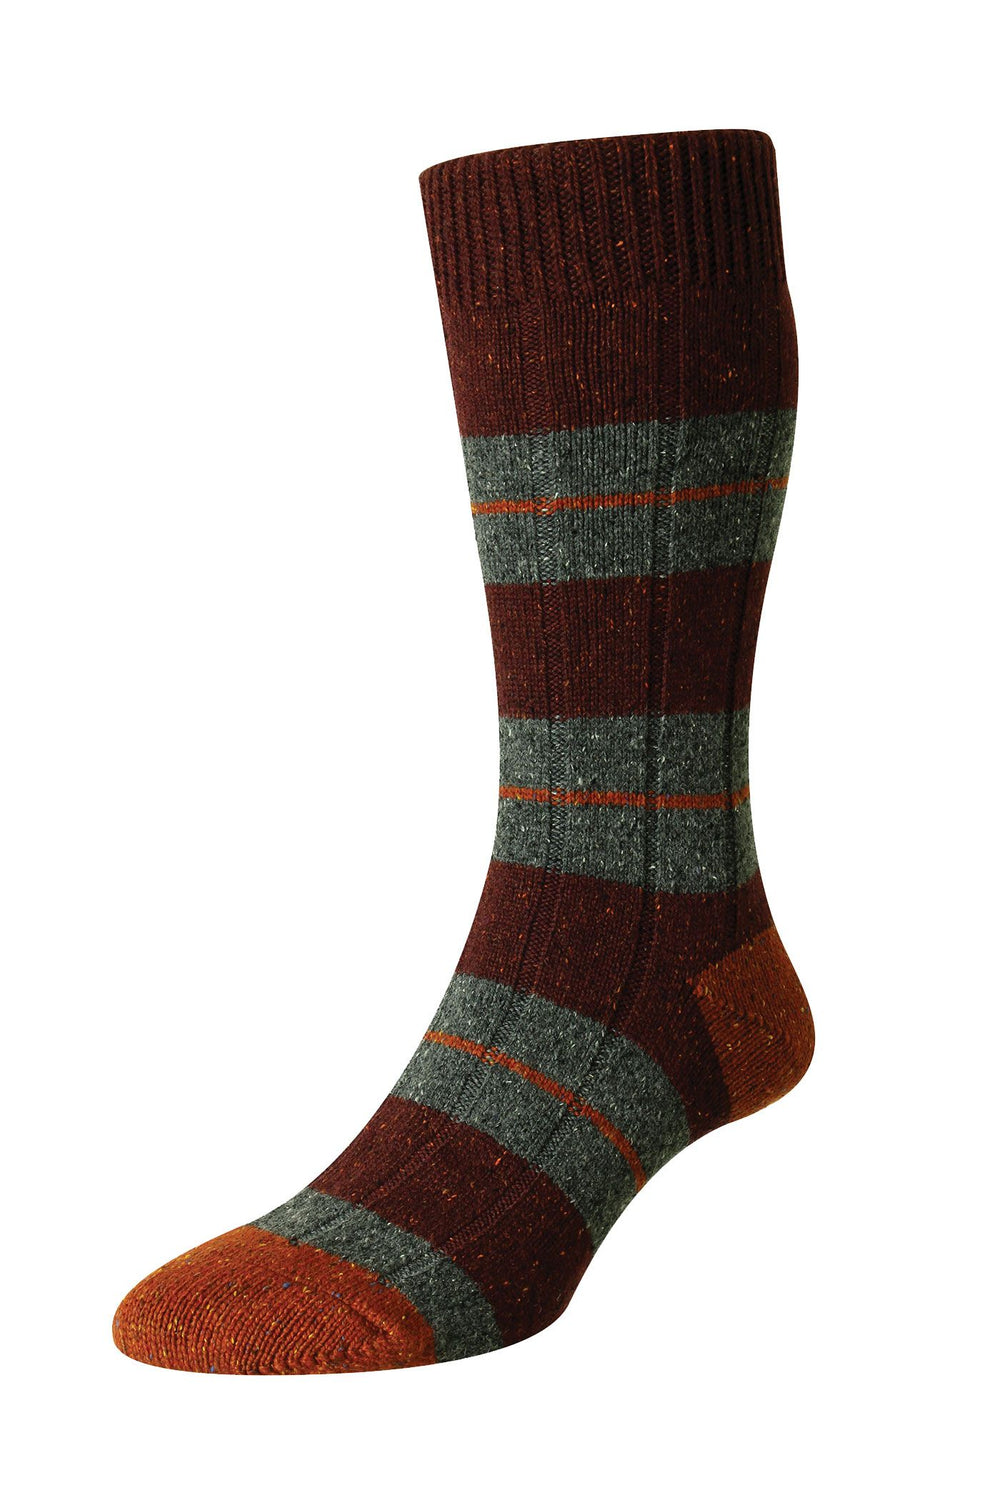 Pantherella Bayfield Striped Wool Socks